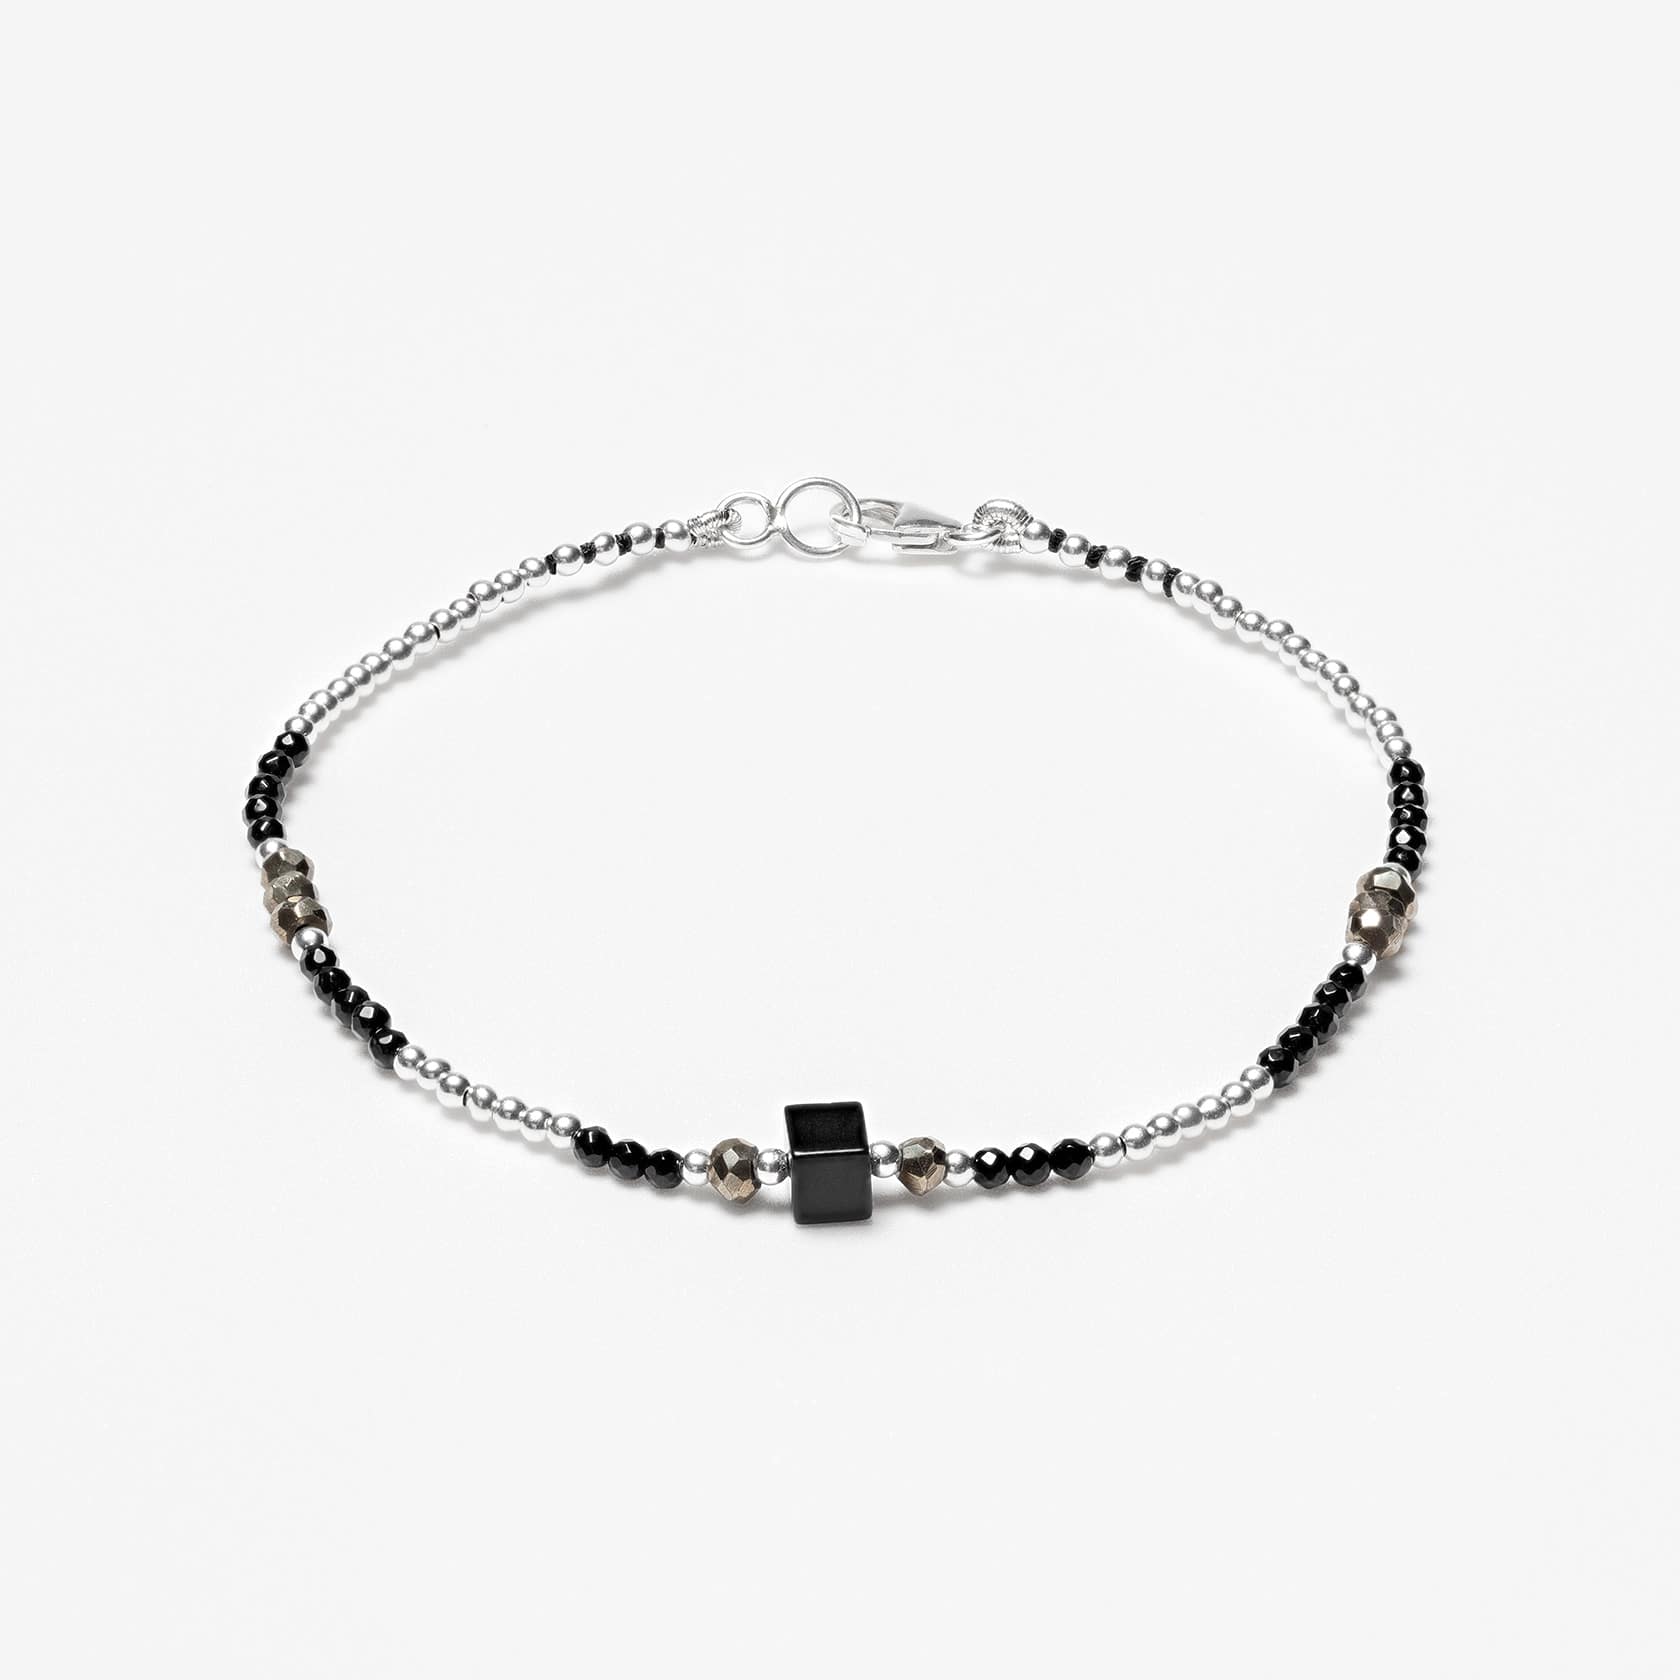 Onyx and muscovite bracelet 